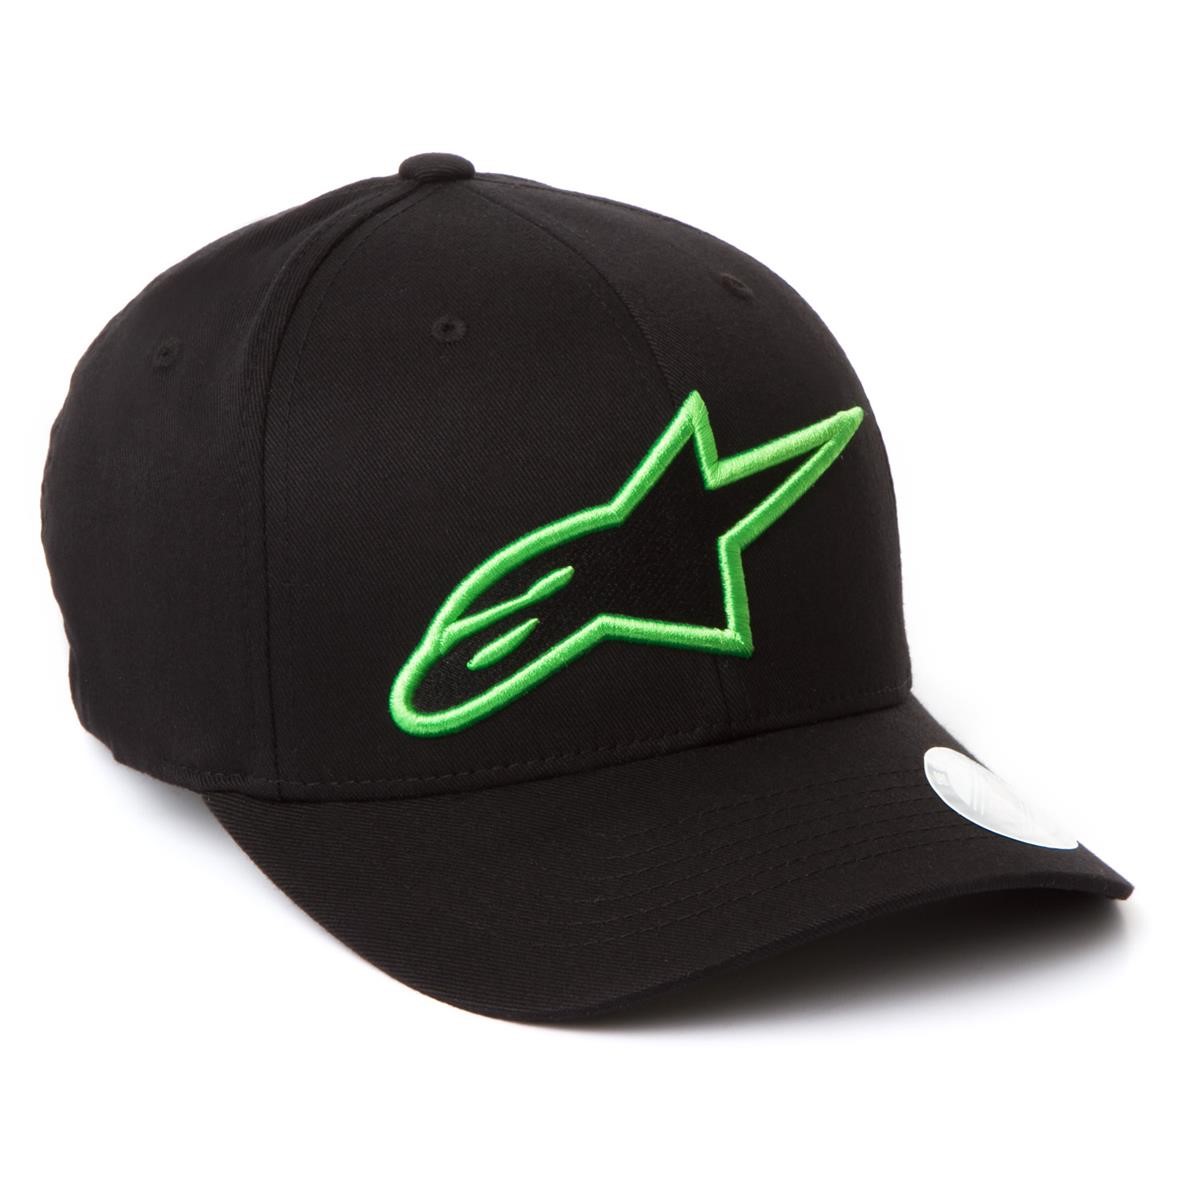 Freizeit/Streetwear Bekleidung-Beanies/Mützen/Caps - Alpinestars Flexfit Cap/Mütze Logo Astar Black/Monster Green